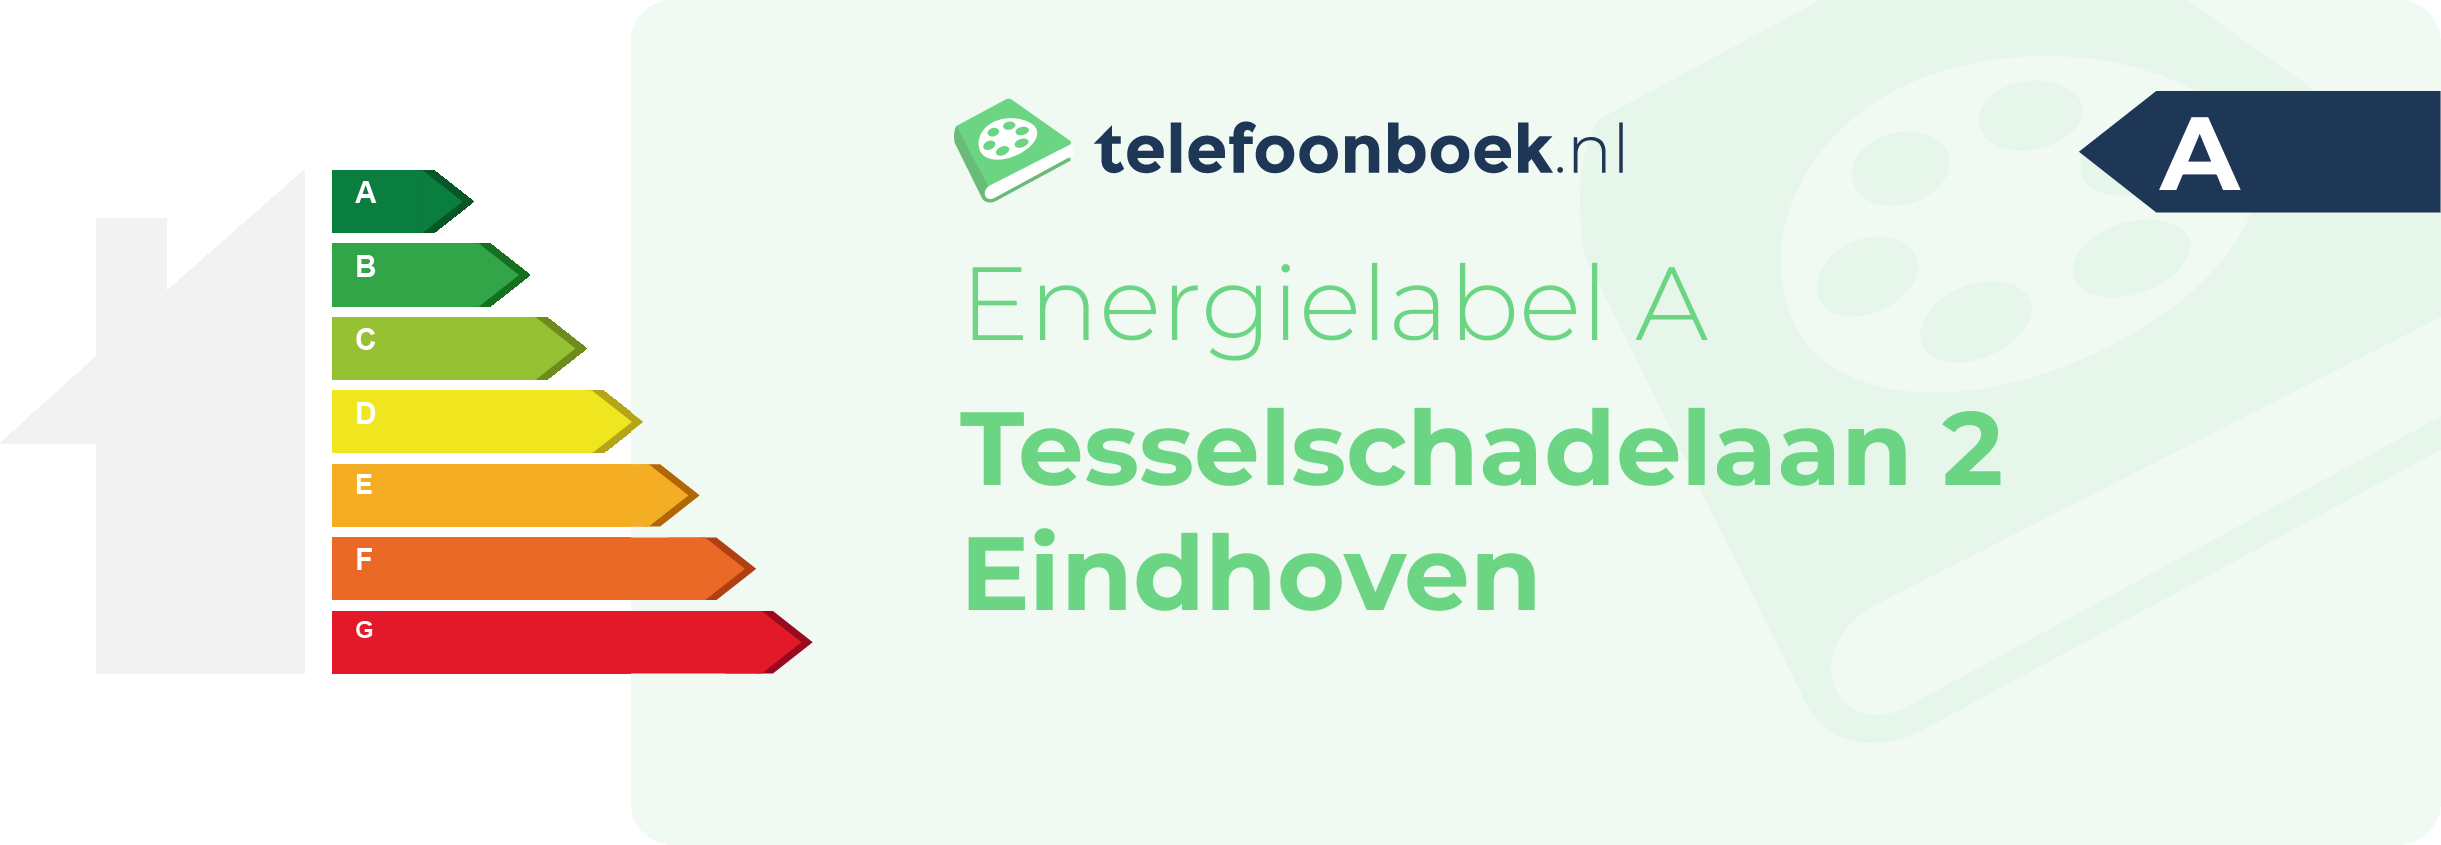 Energielabel Tesselschadelaan 2 Eindhoven